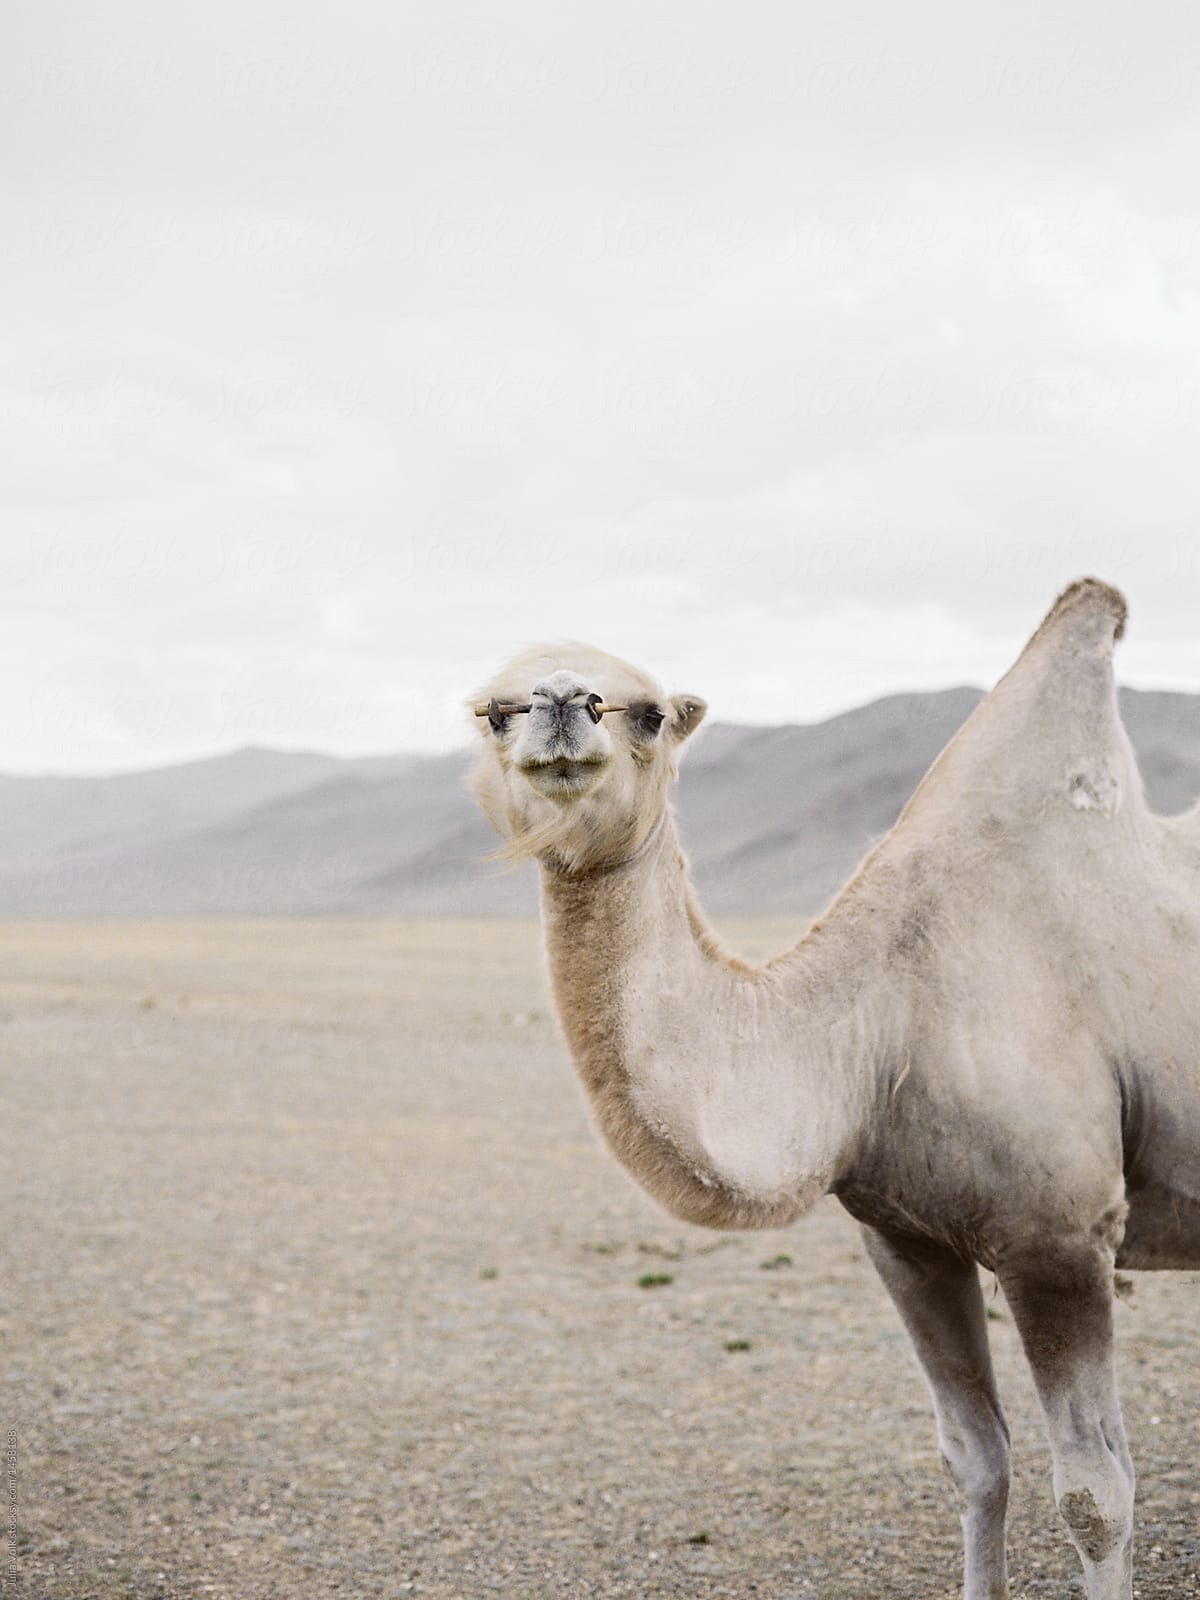 Camel in plain looking at camera